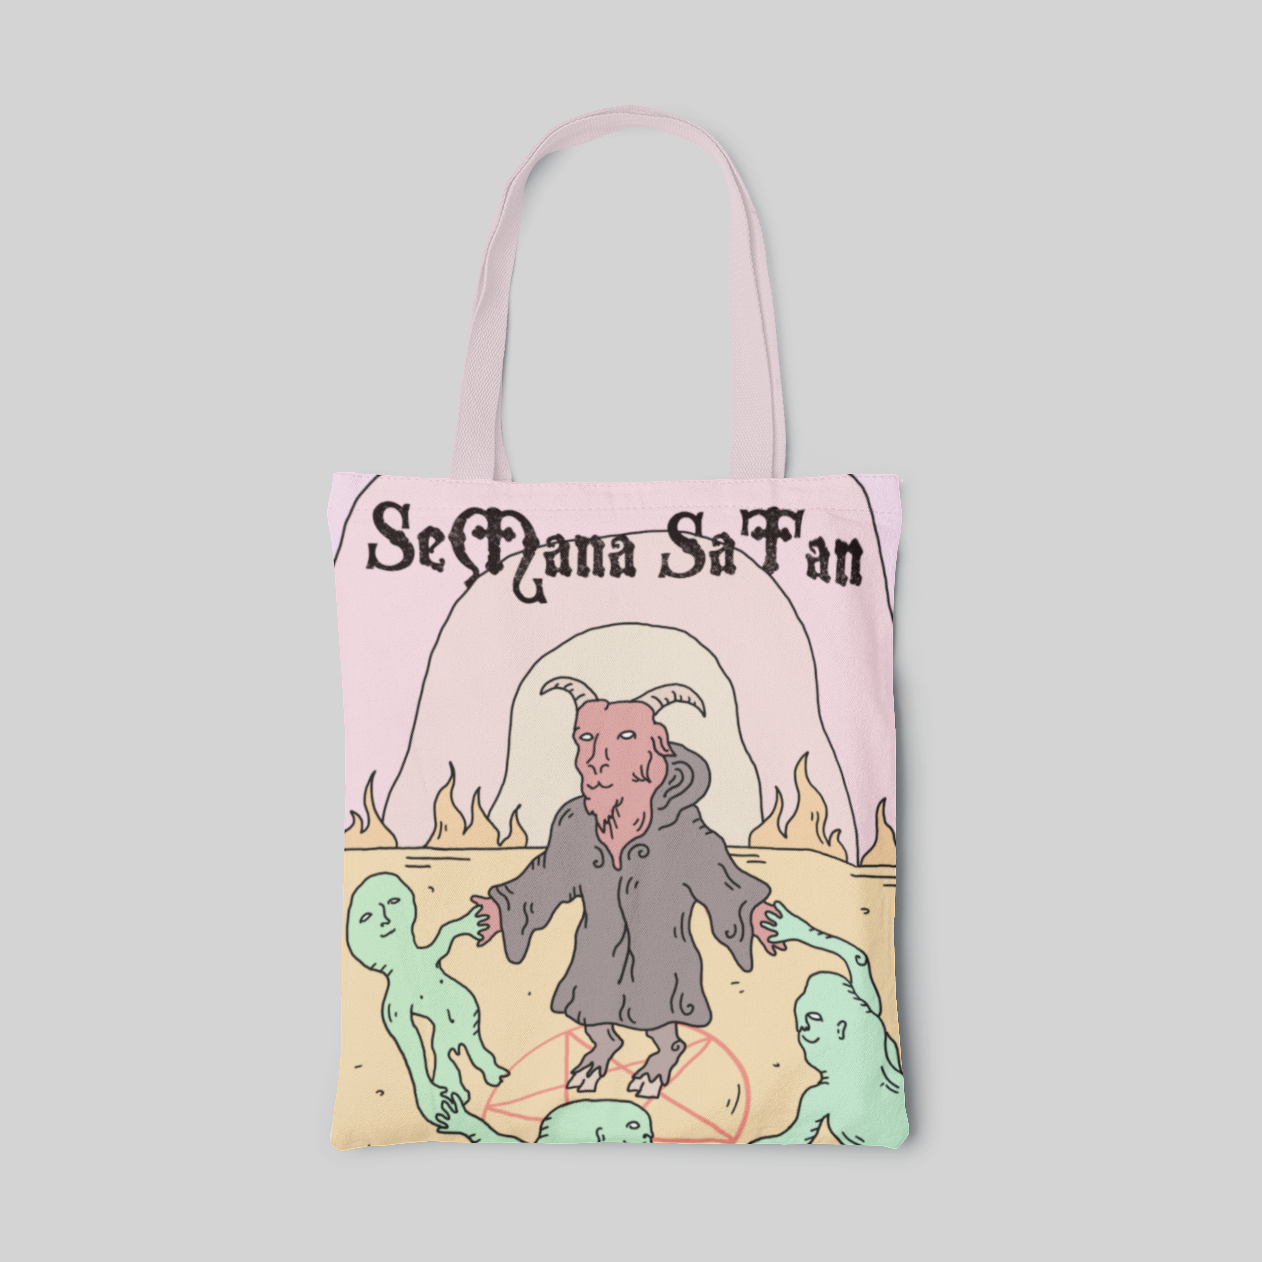 Tote bag with satan illustration and three green aliens print